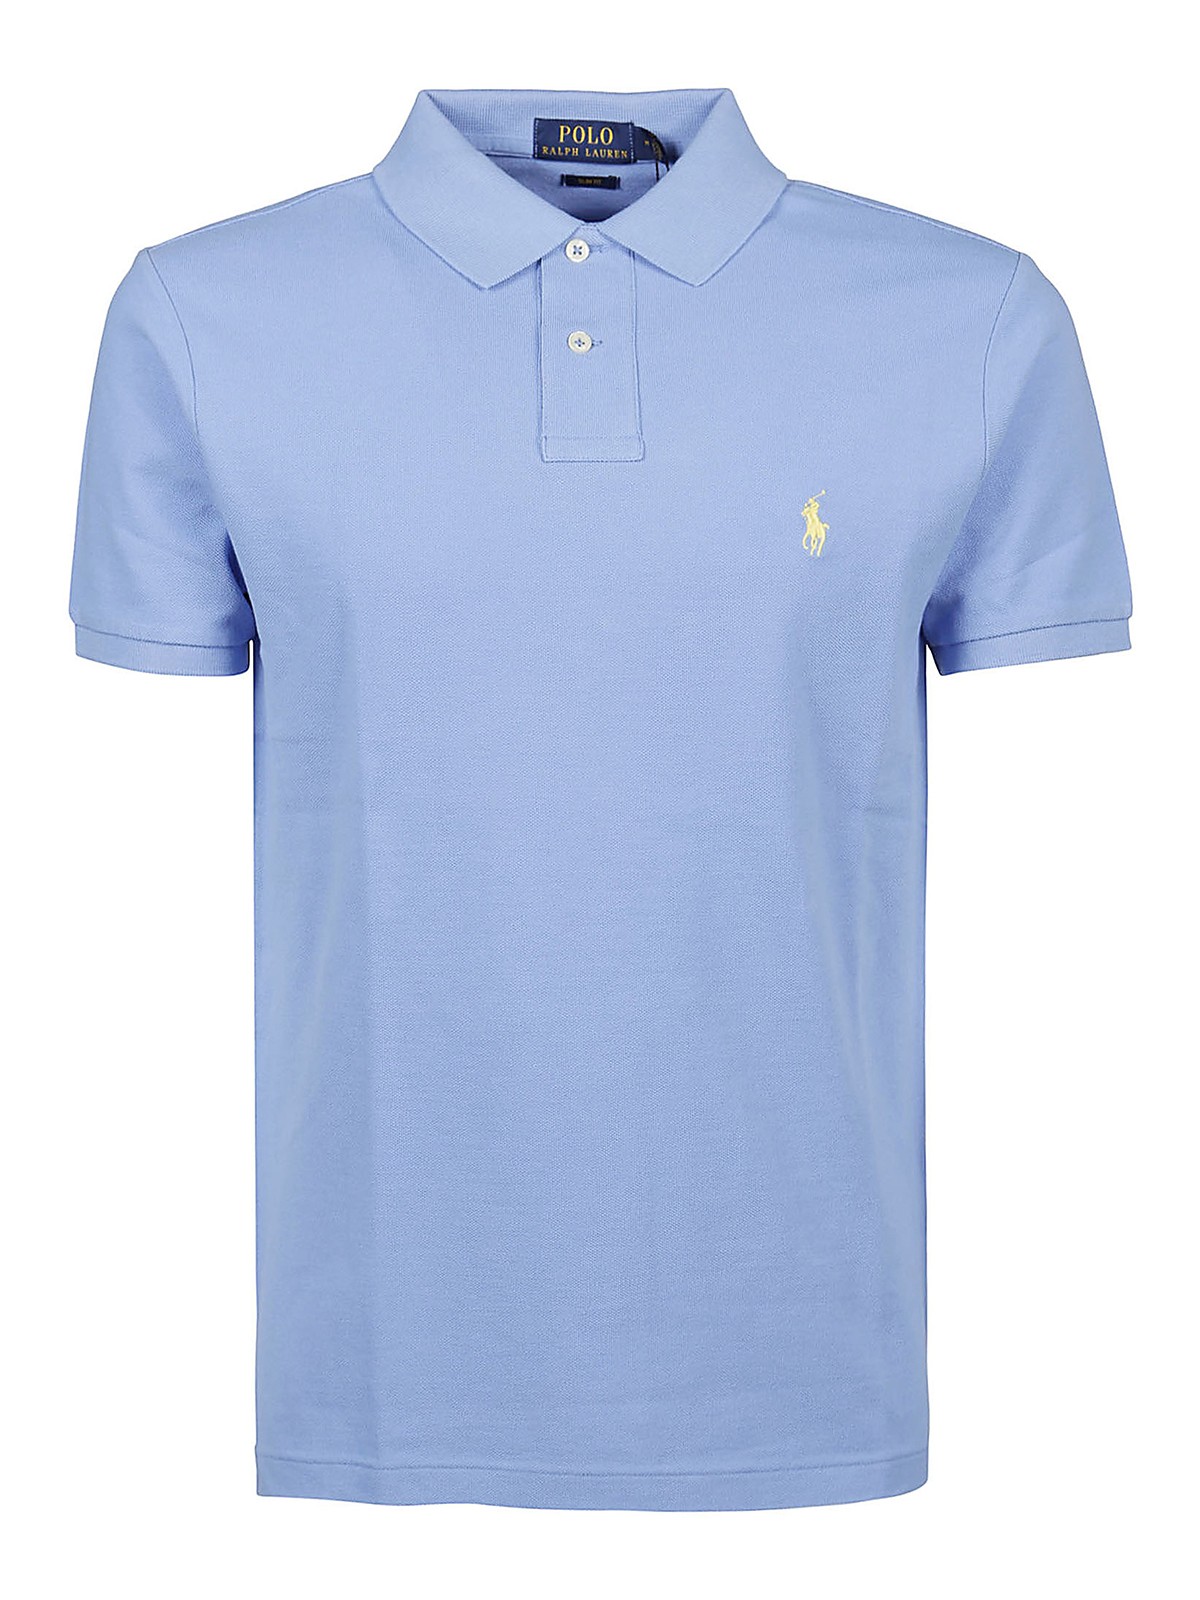 Polo Ralph Lauren Light Blue Cotton Polo Shirt | ModeSens